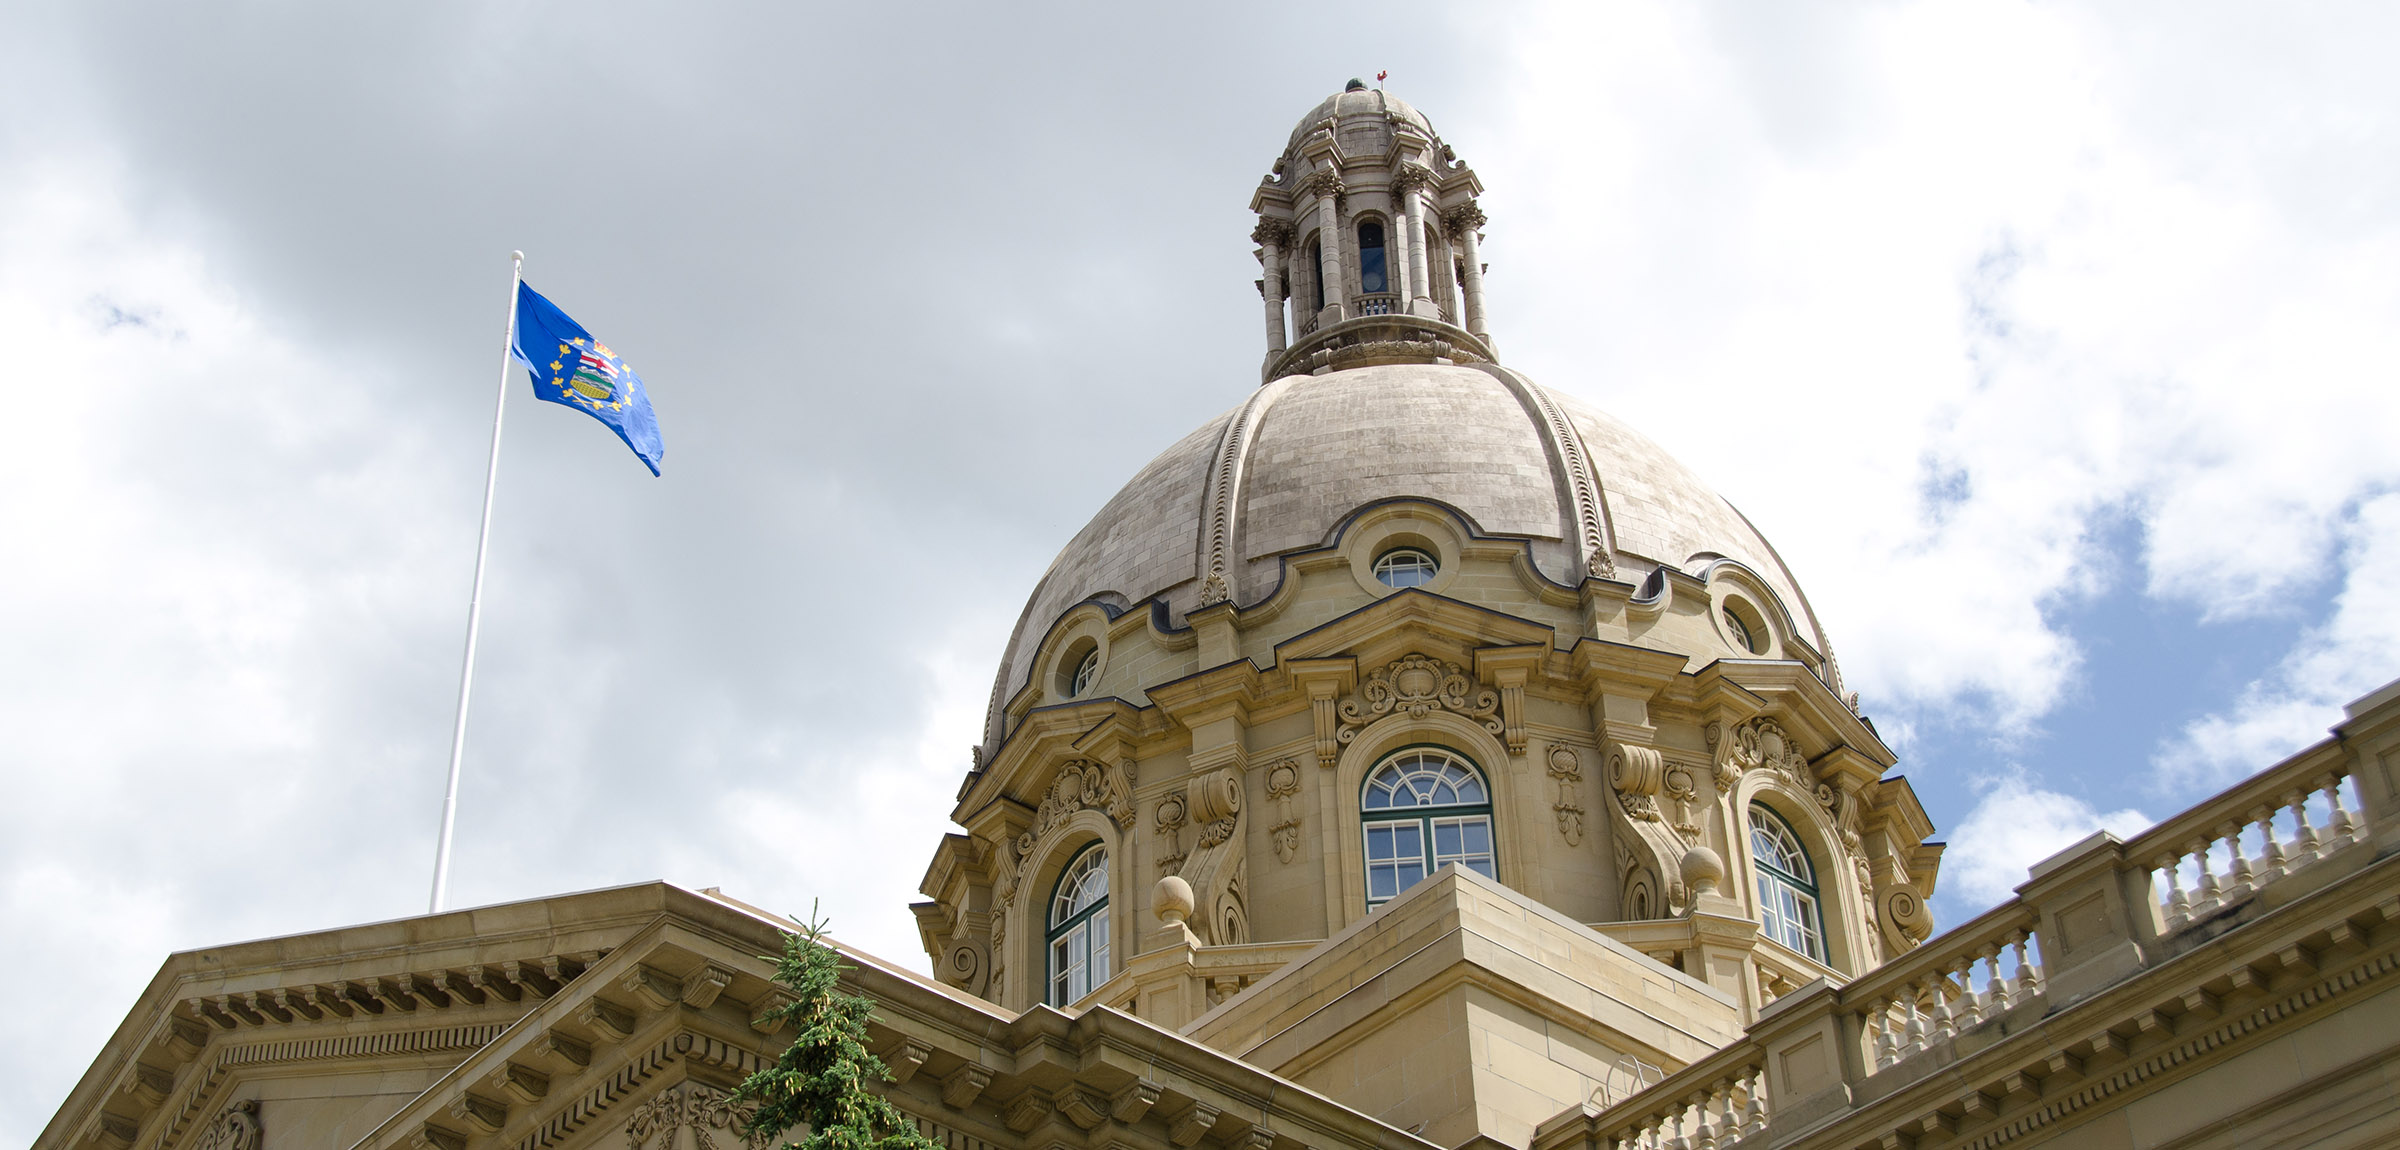 Alberta Legislature dome with blue provincial flag